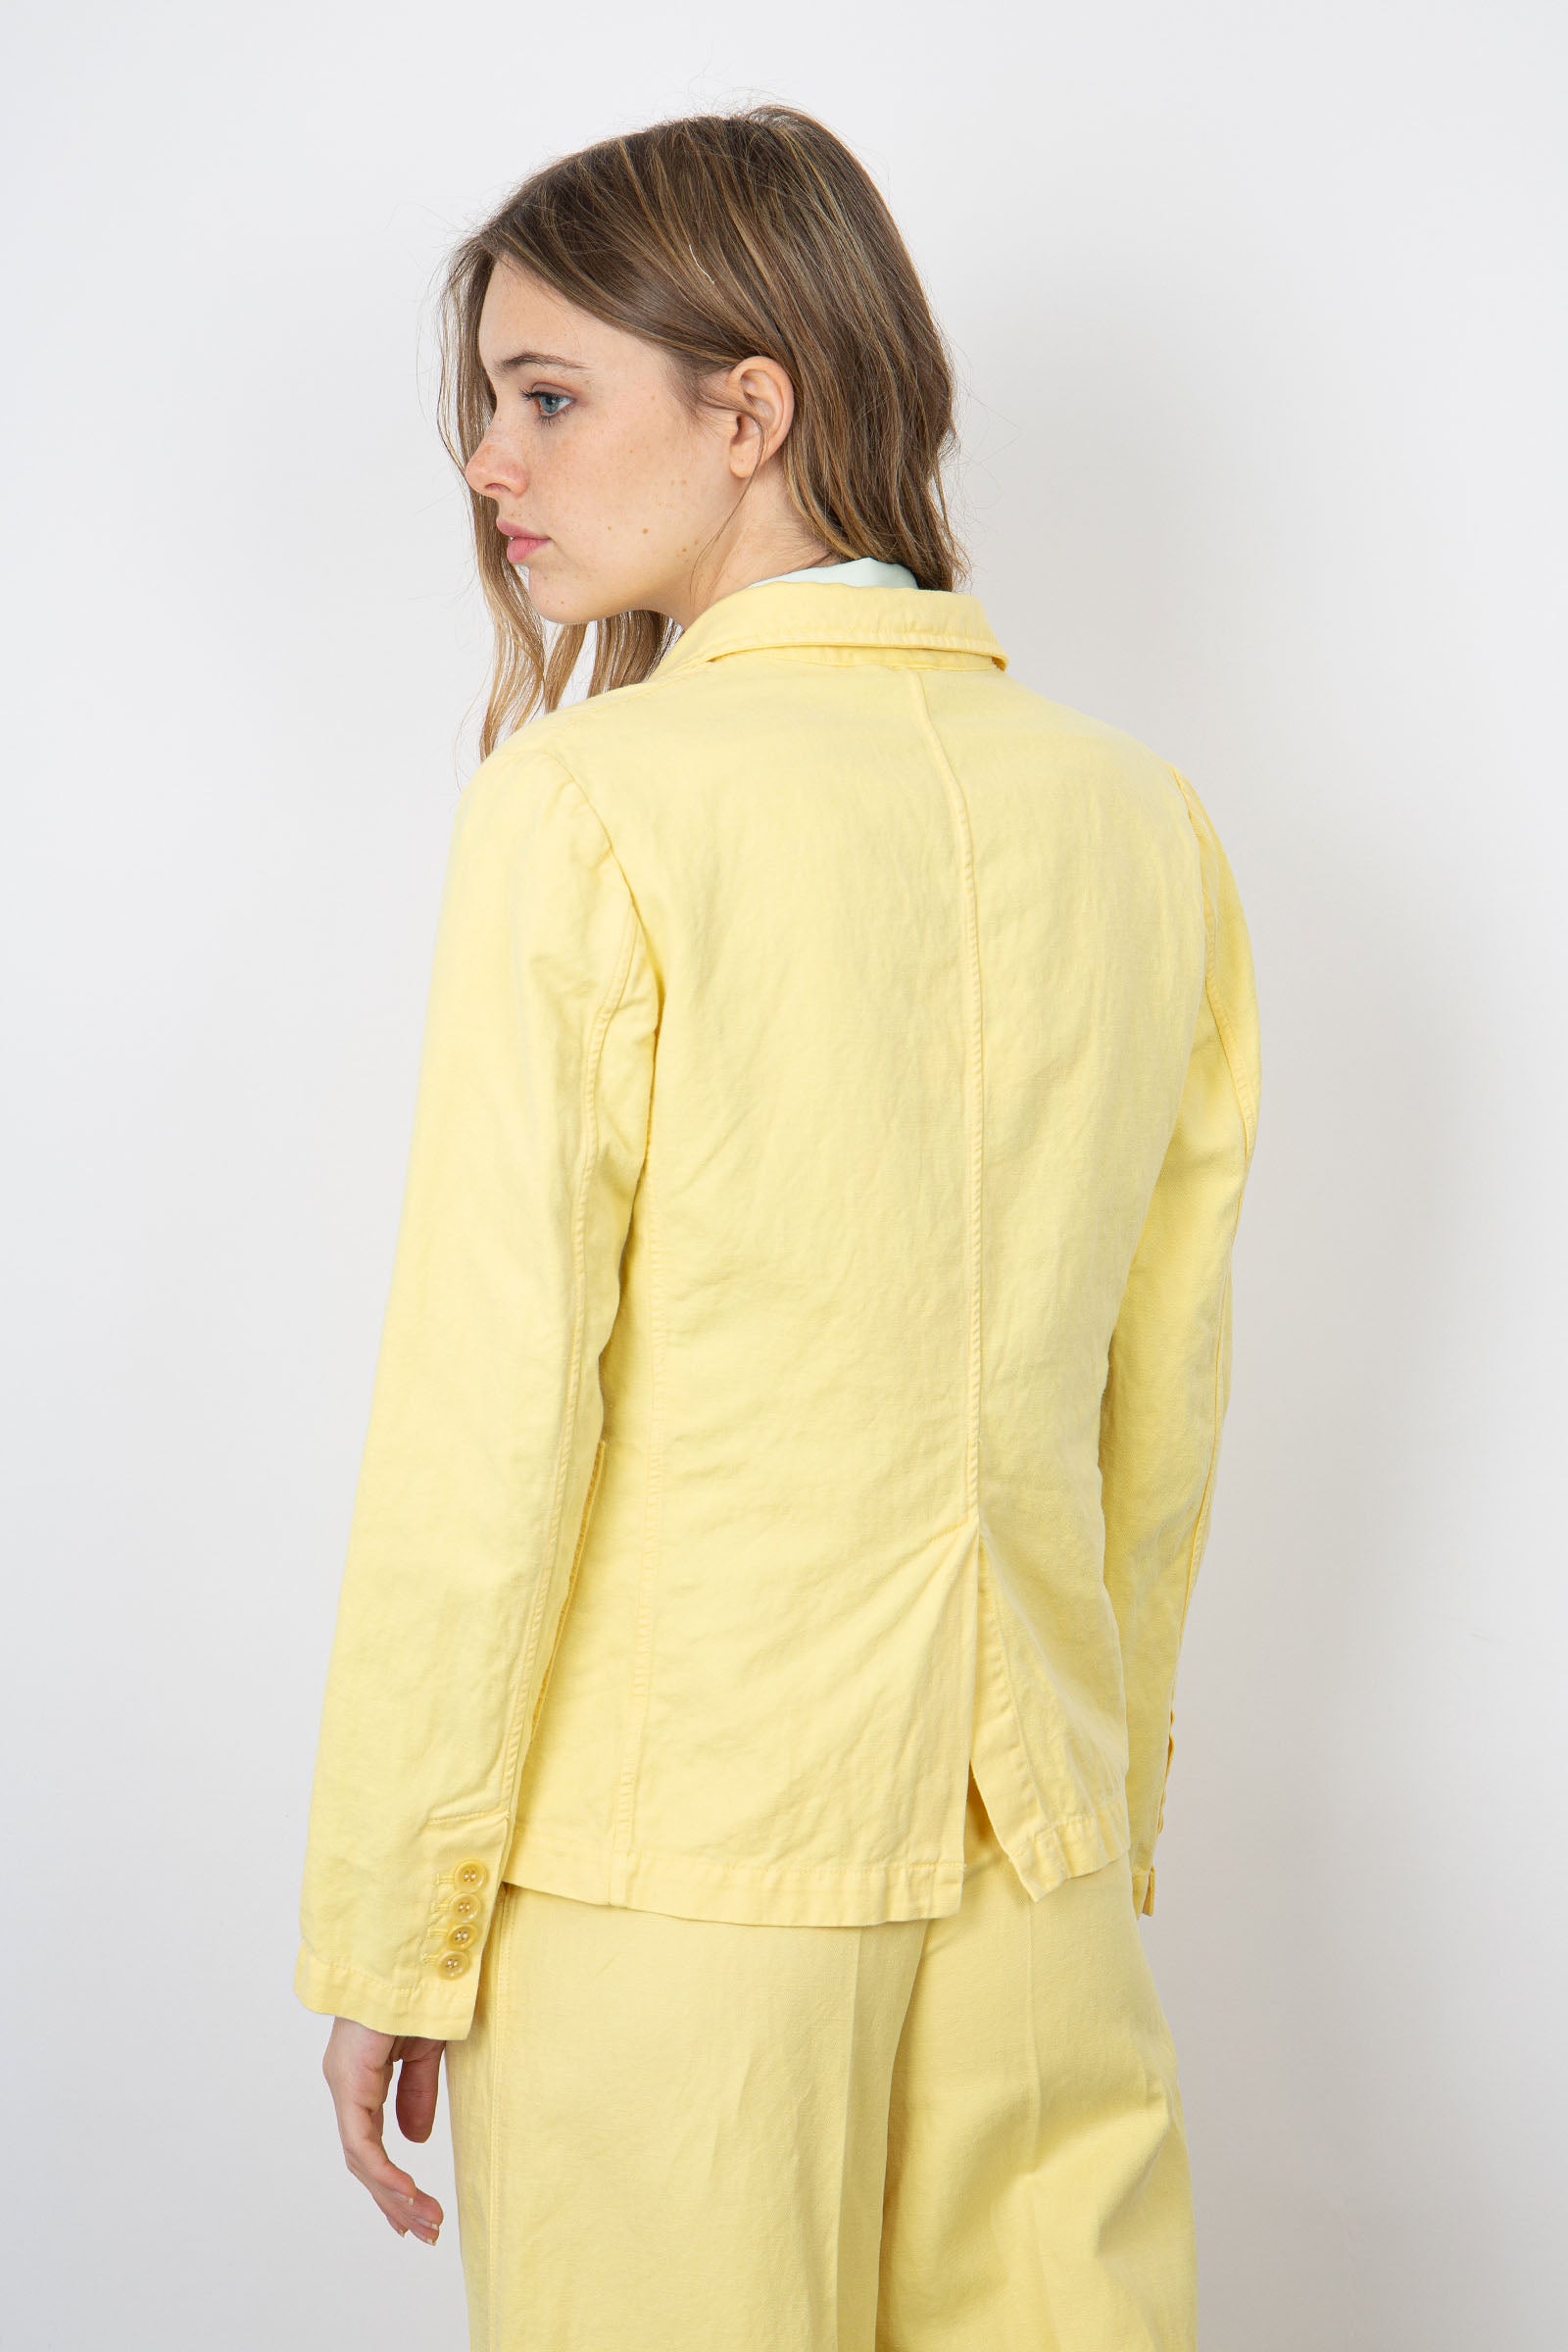 Aspesi Cotton/Linen Yellow Jacket 0930 G20885155 - 4